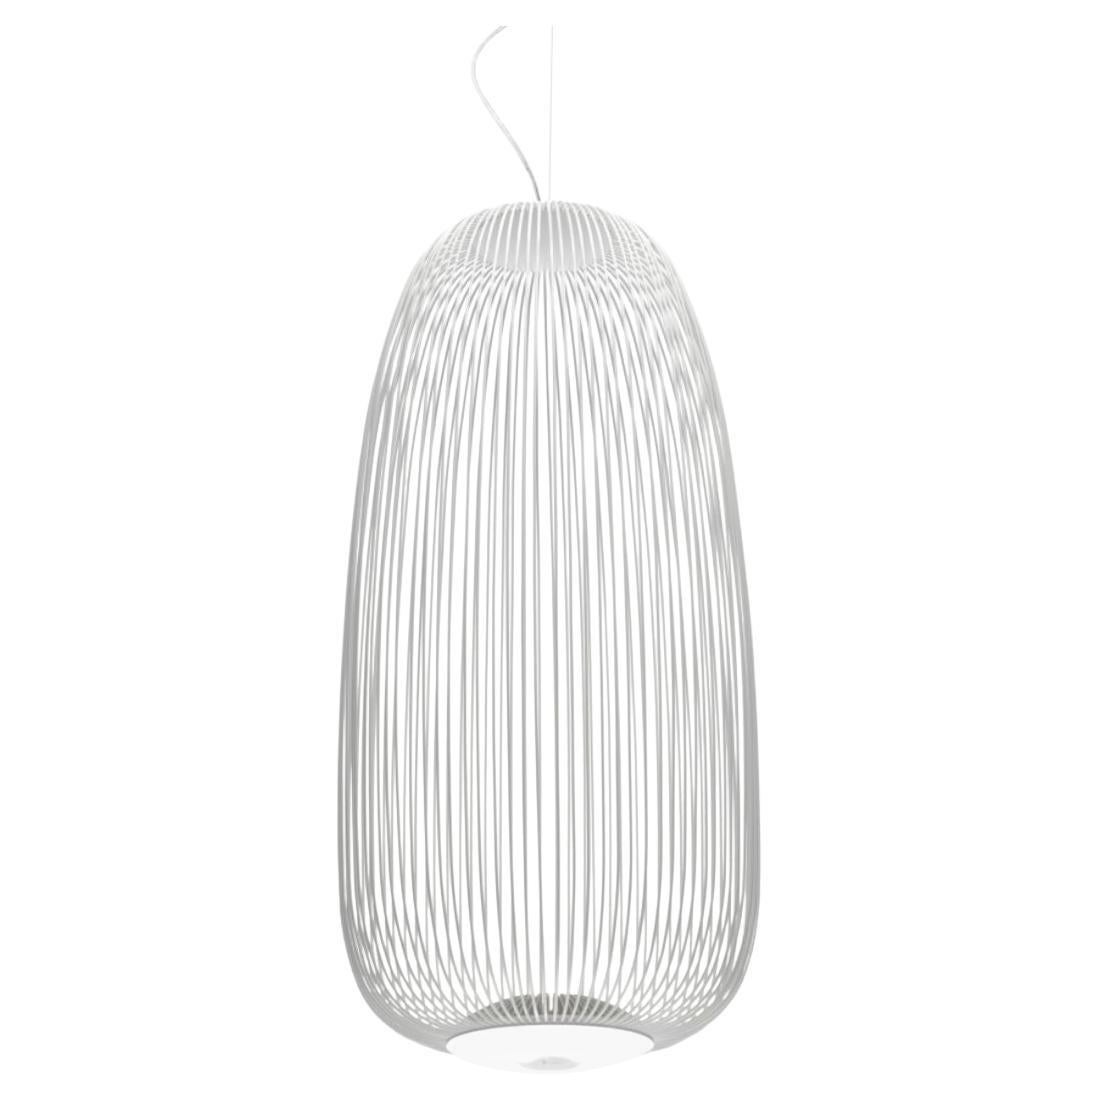 Garcia and Cumini 'Spokes 1' Metal Suspension Lamp in White for Foscarini (Suspension en métal 'Spokes 1' en blanc pour Foscarini)